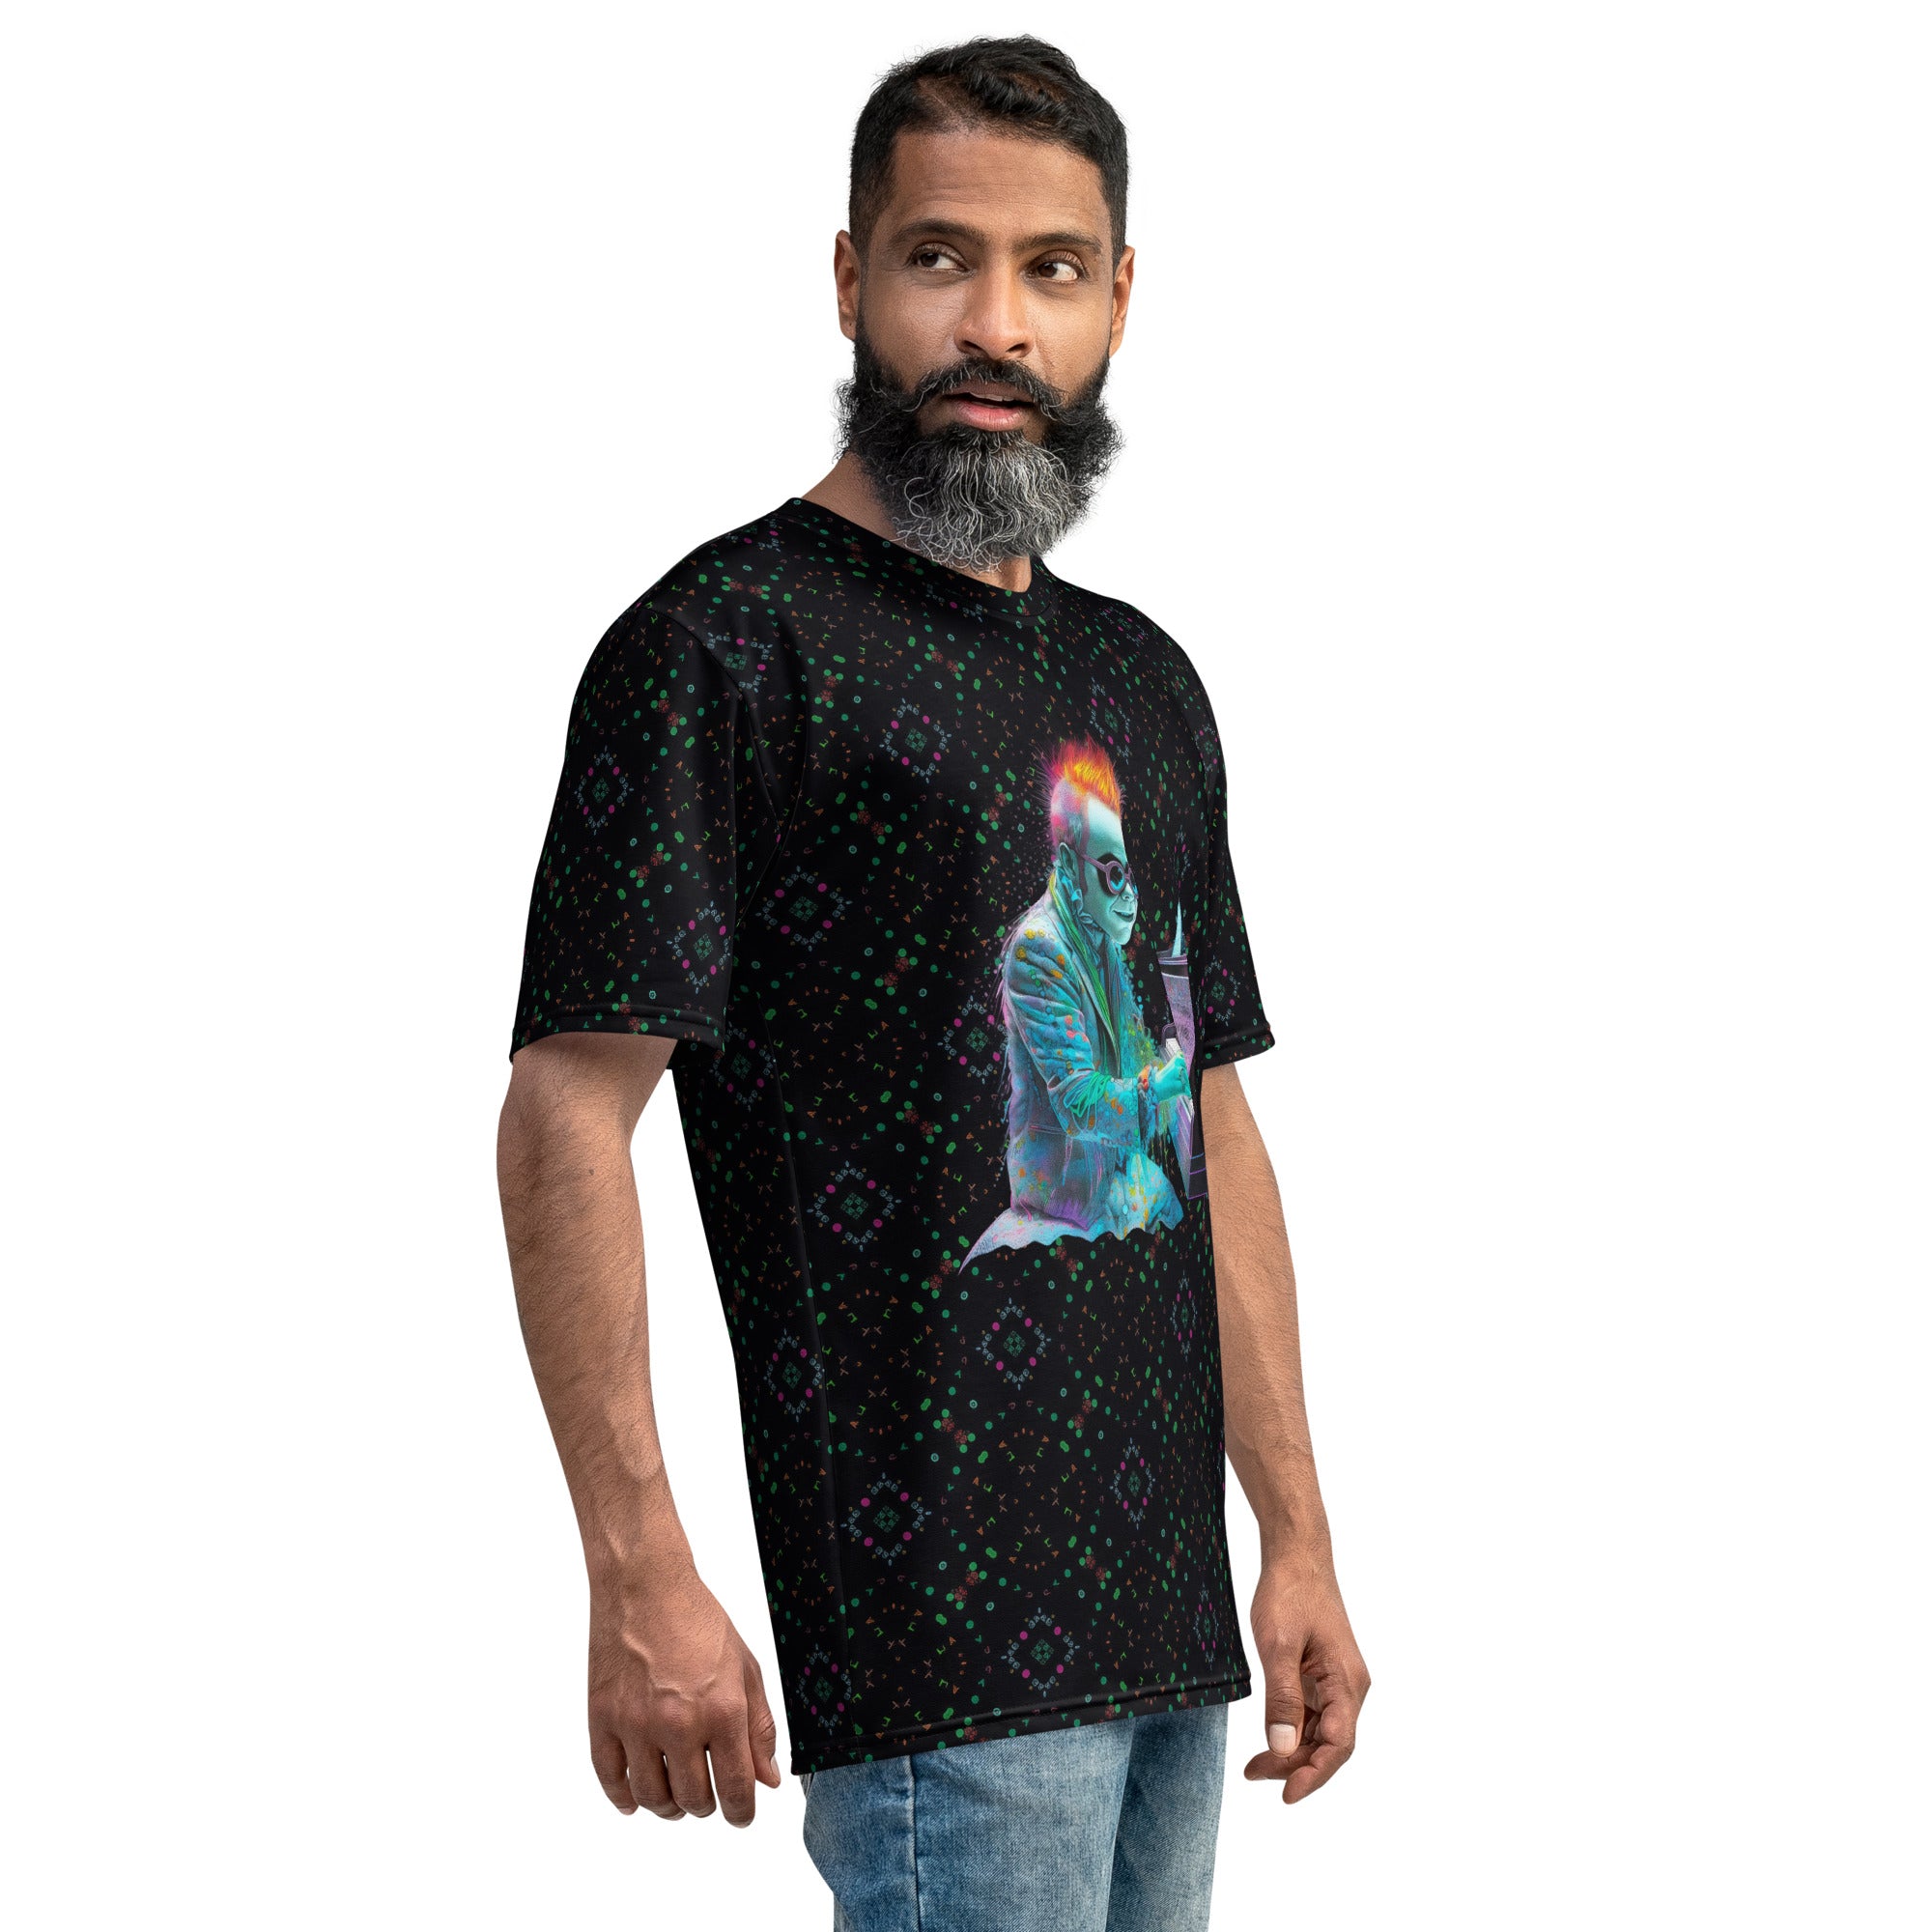 Model wearing Urban Graffiti Men's T-Shirt - side view.